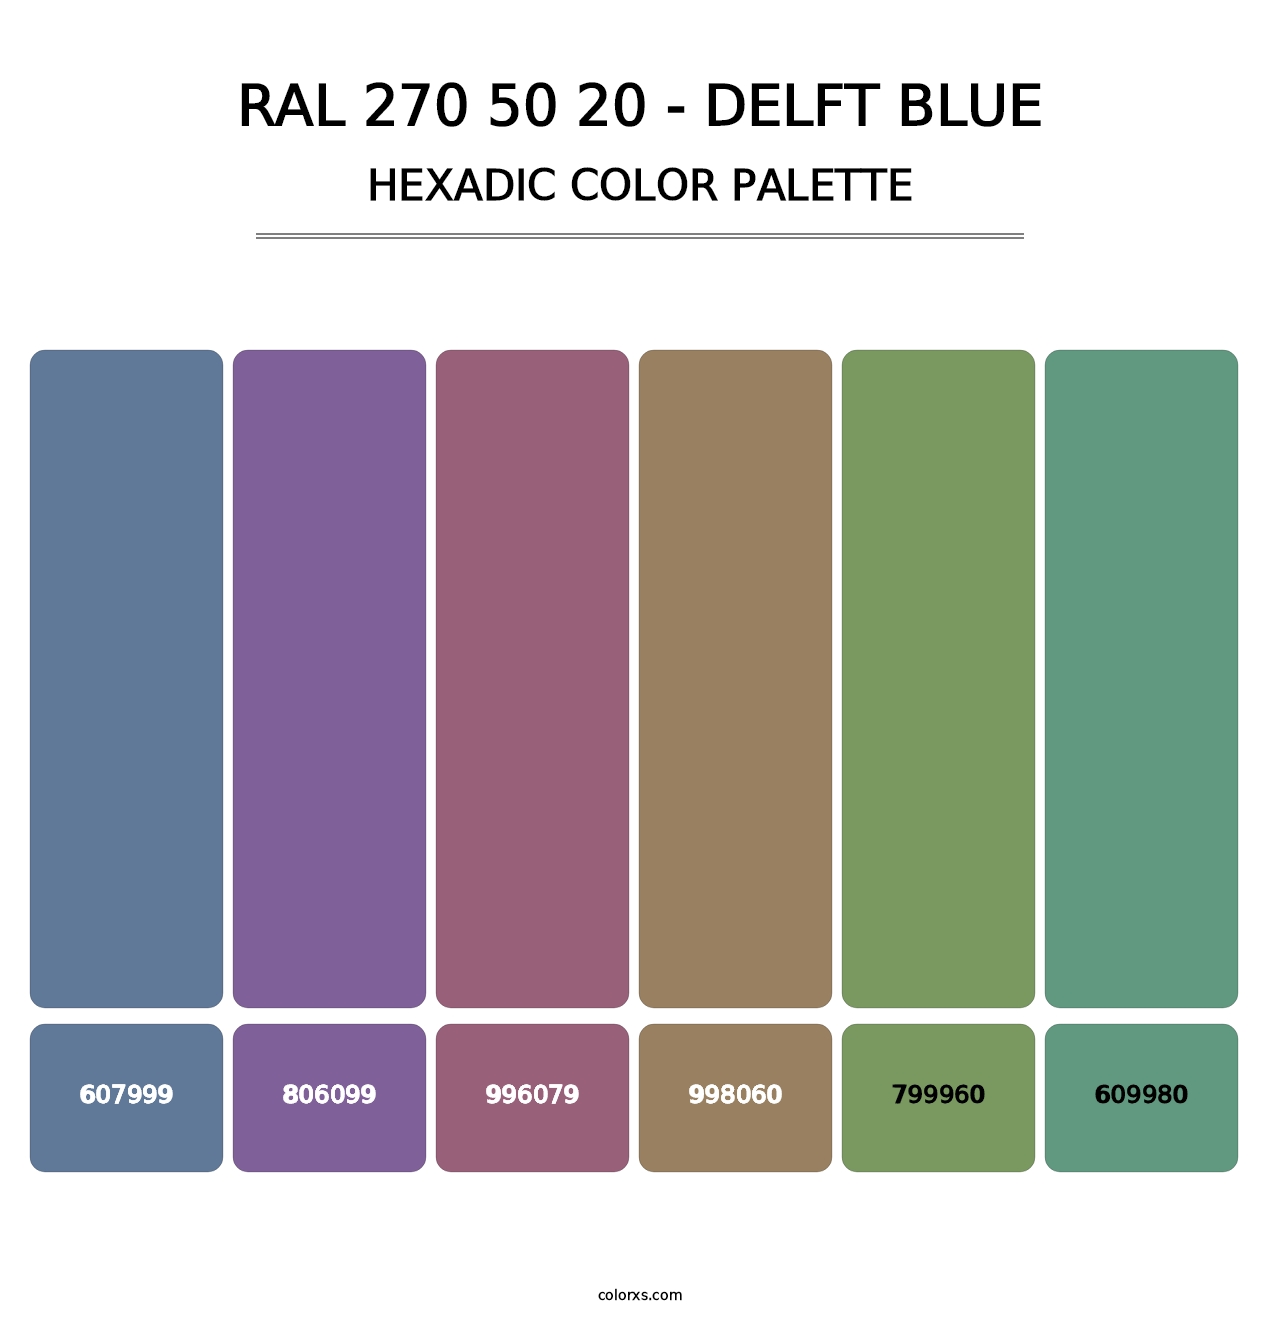 RAL 270 50 20 - Delft Blue - Hexadic Color Palette